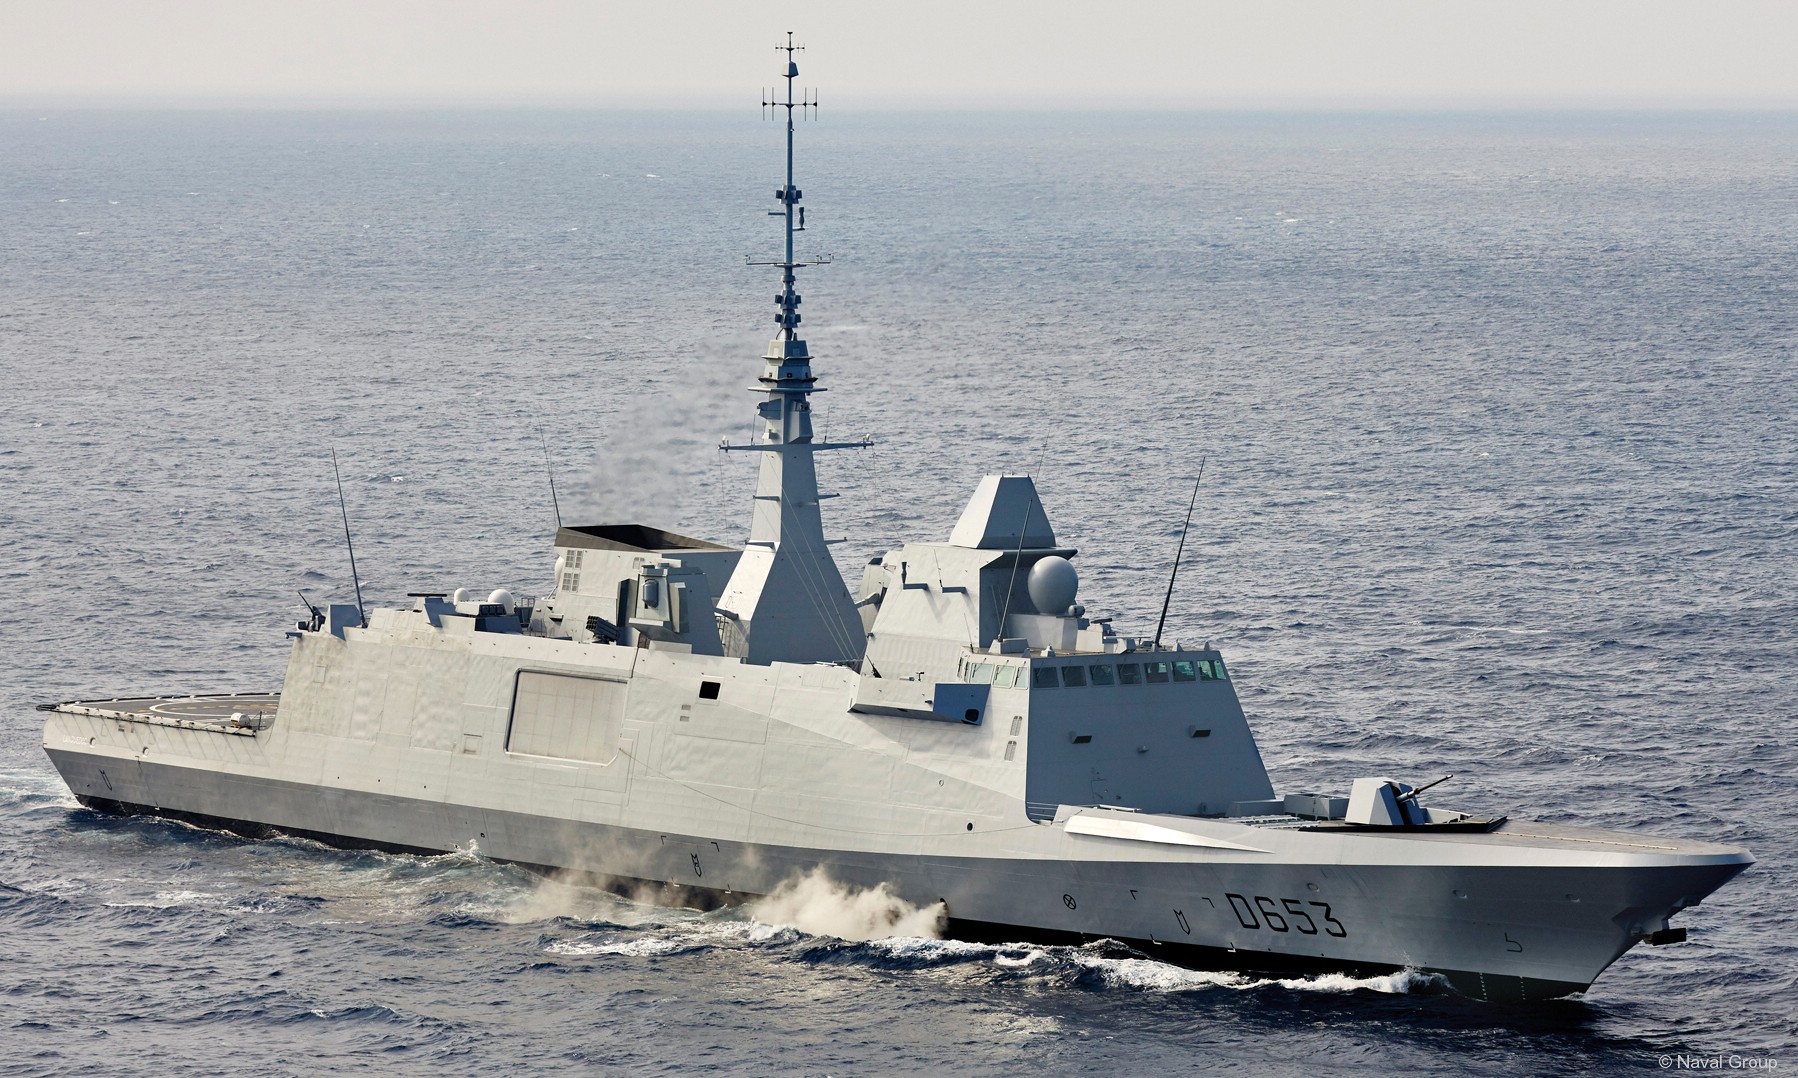 d-653 fs languedoc fremm aquitaine class frigate fregate multi purpose french navy marine nationale 02x dcns lorient